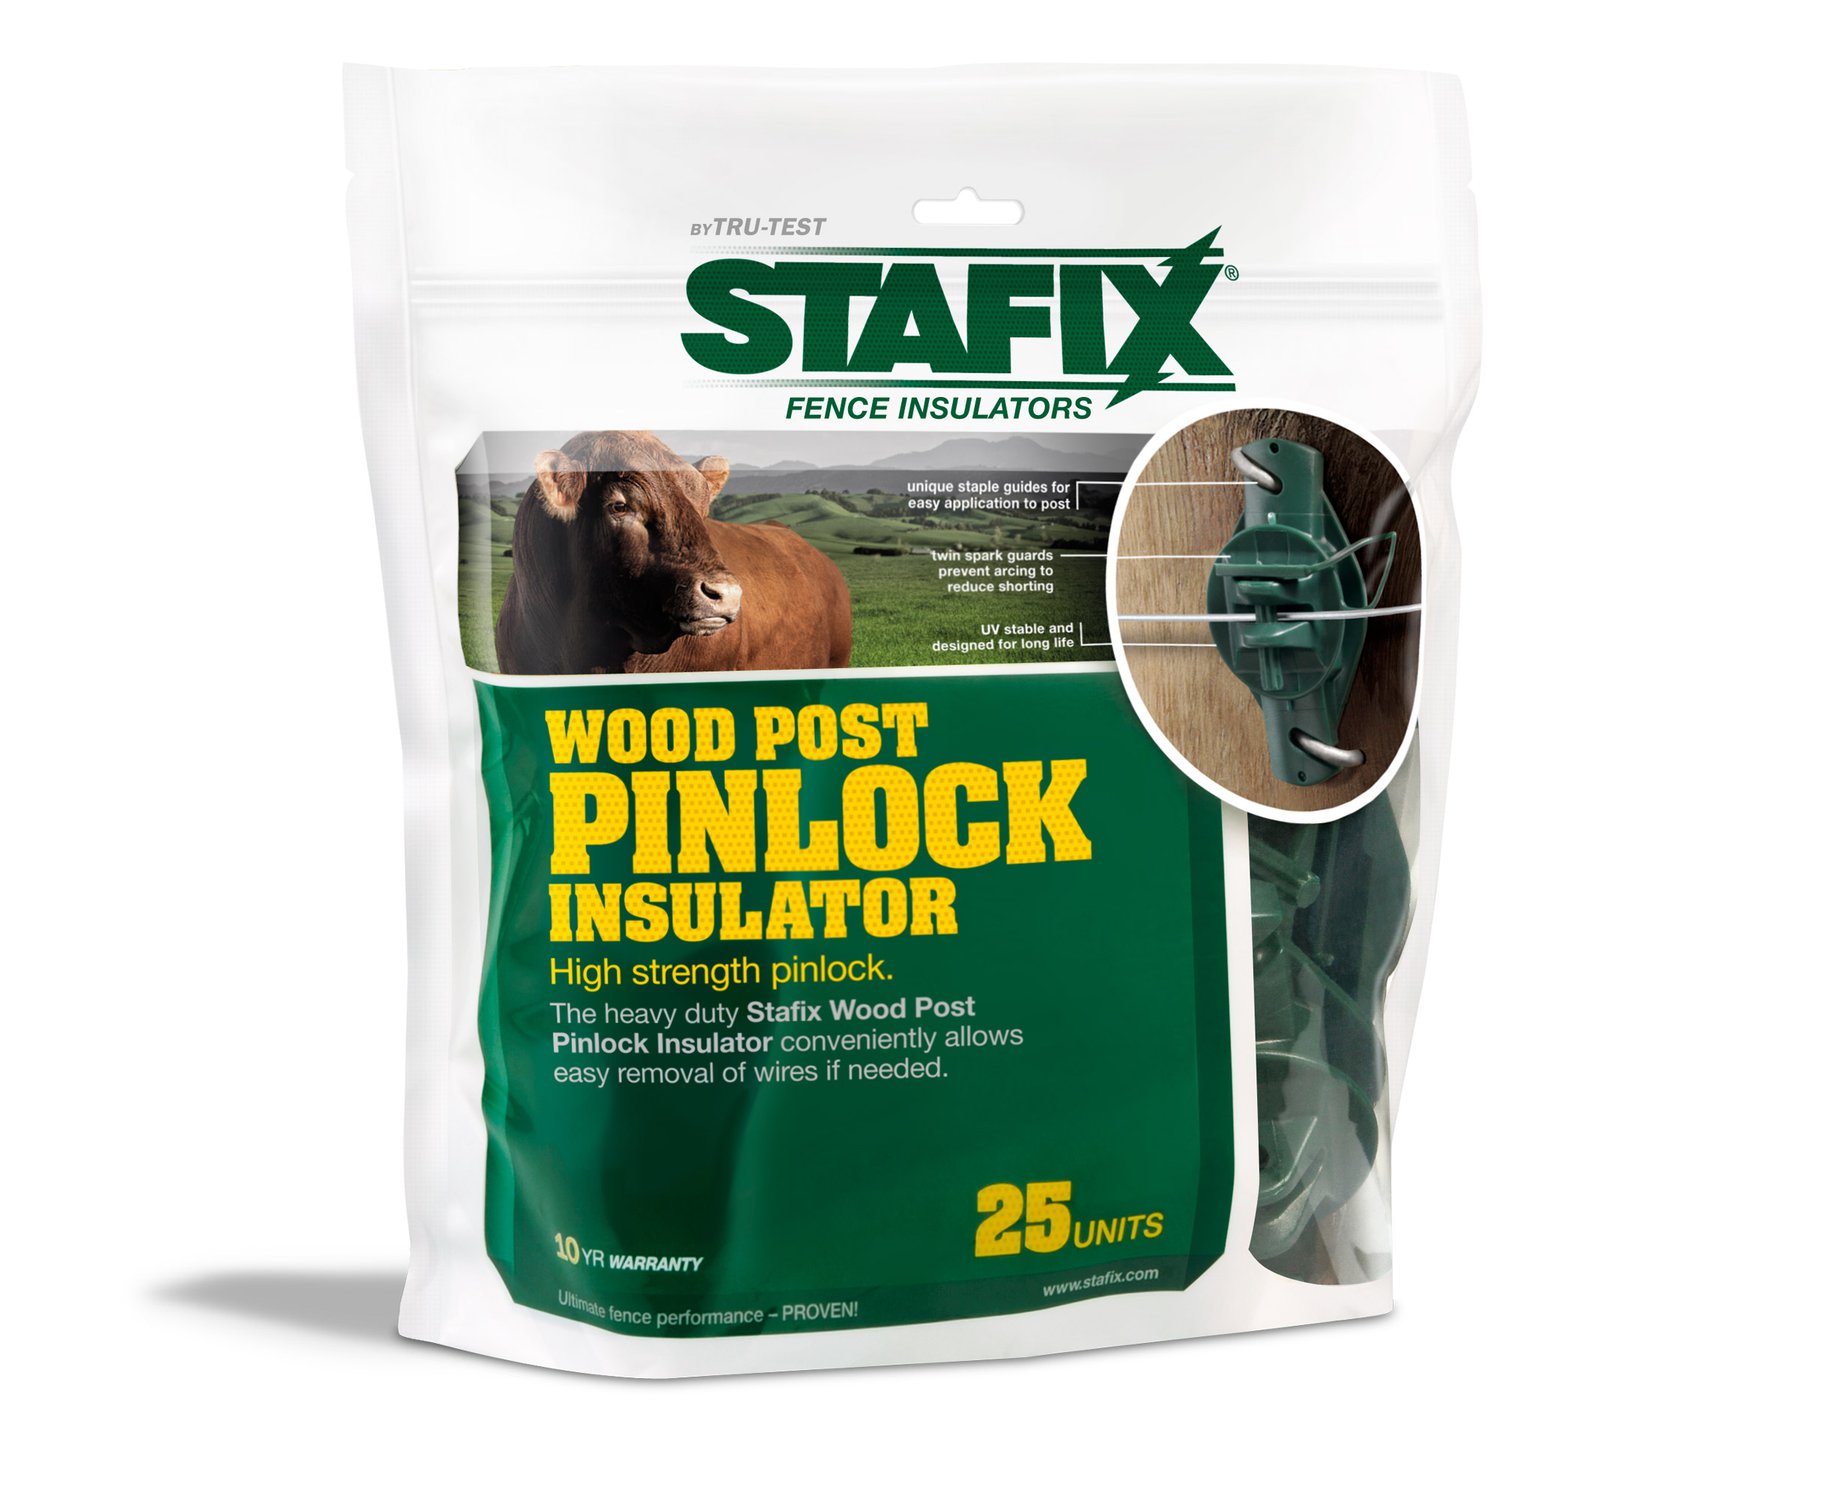 Stafix fence insulators packaging 